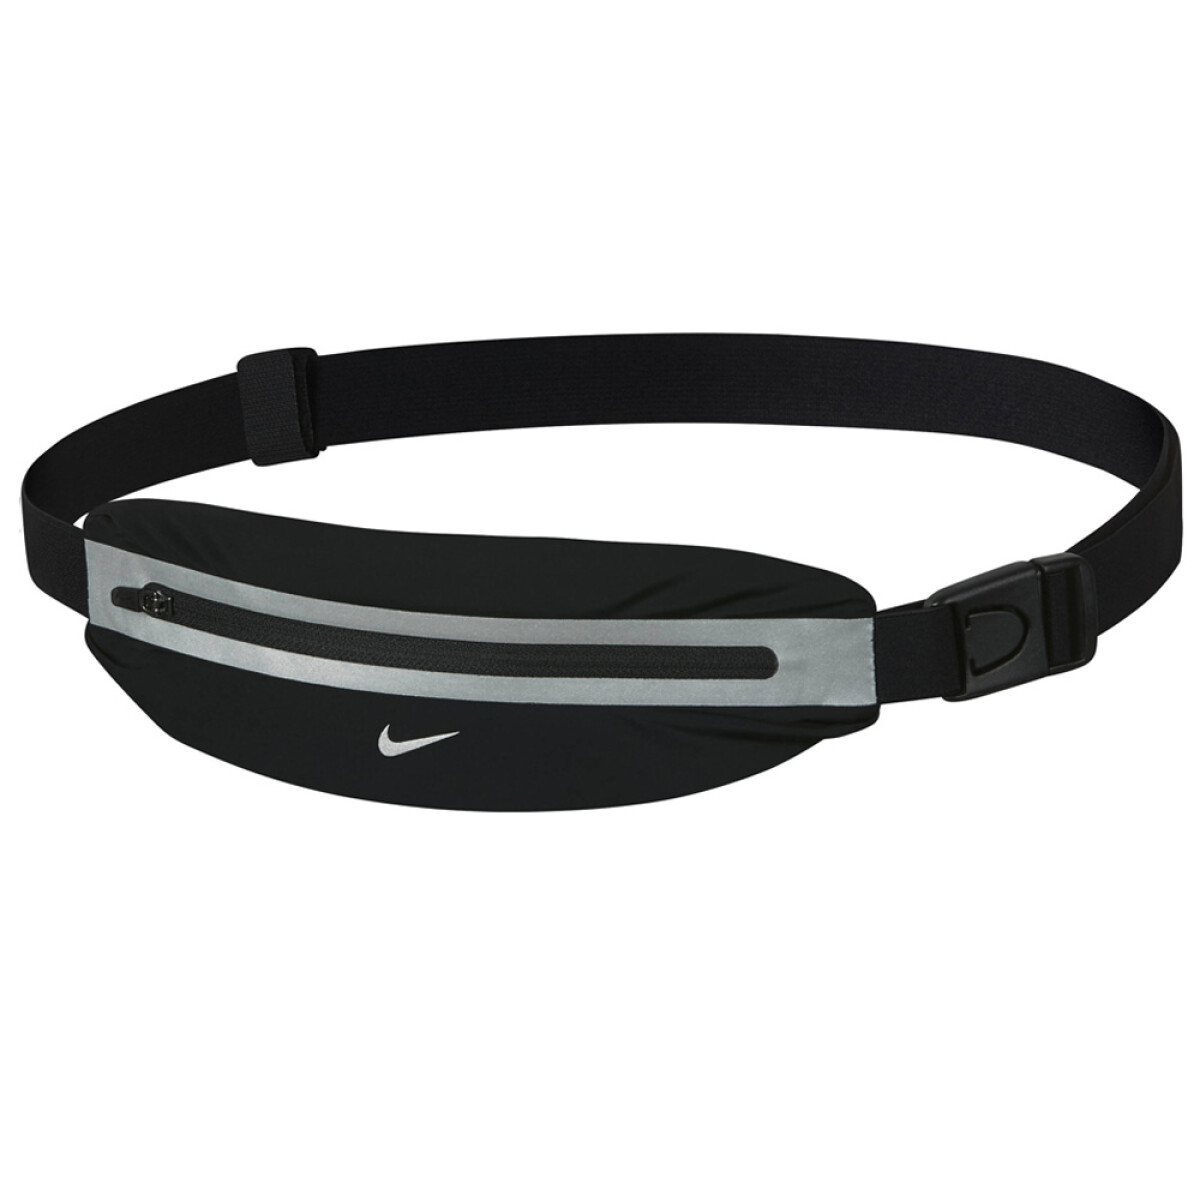 Riñonera Nike Capacity Waistpack 2.0 Black/Silver - Color Único 